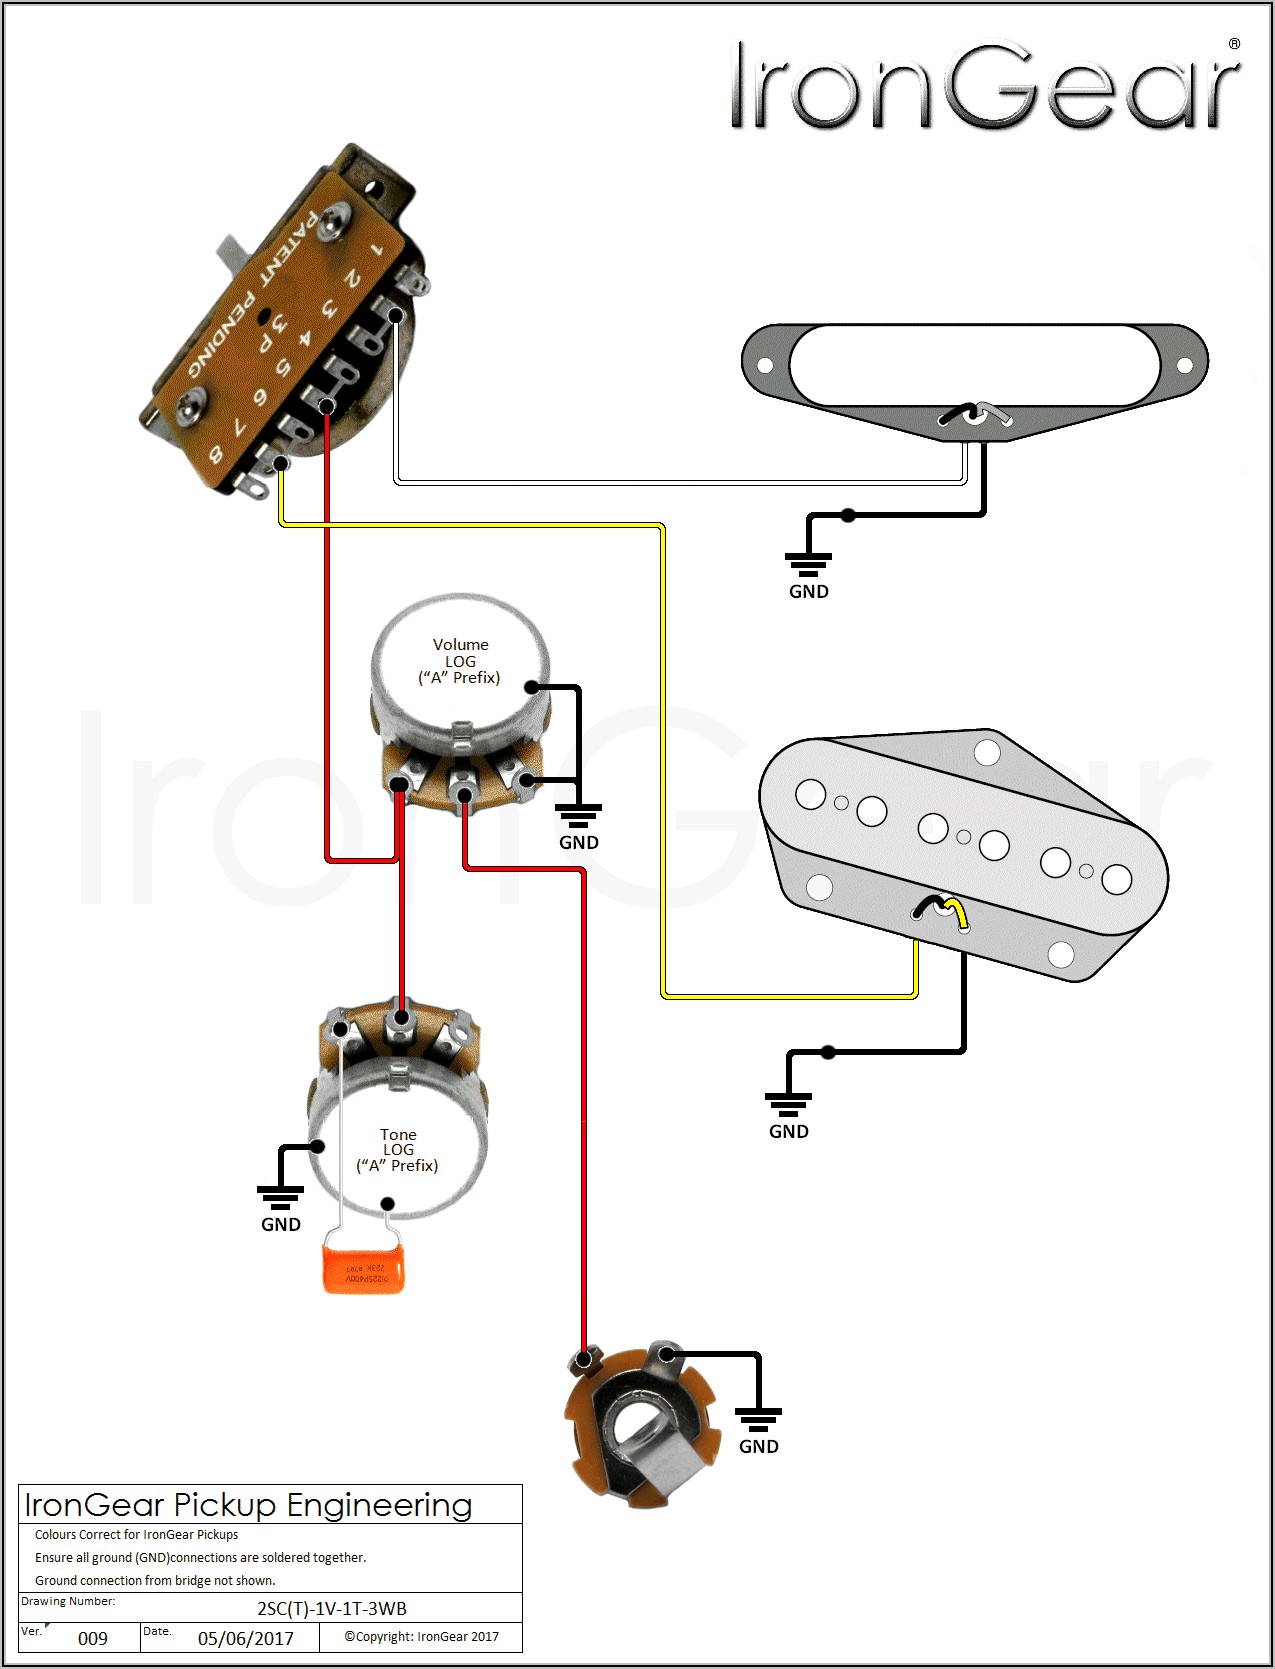 Guitar Wiring Diagrams 2 Single Coil Pickups